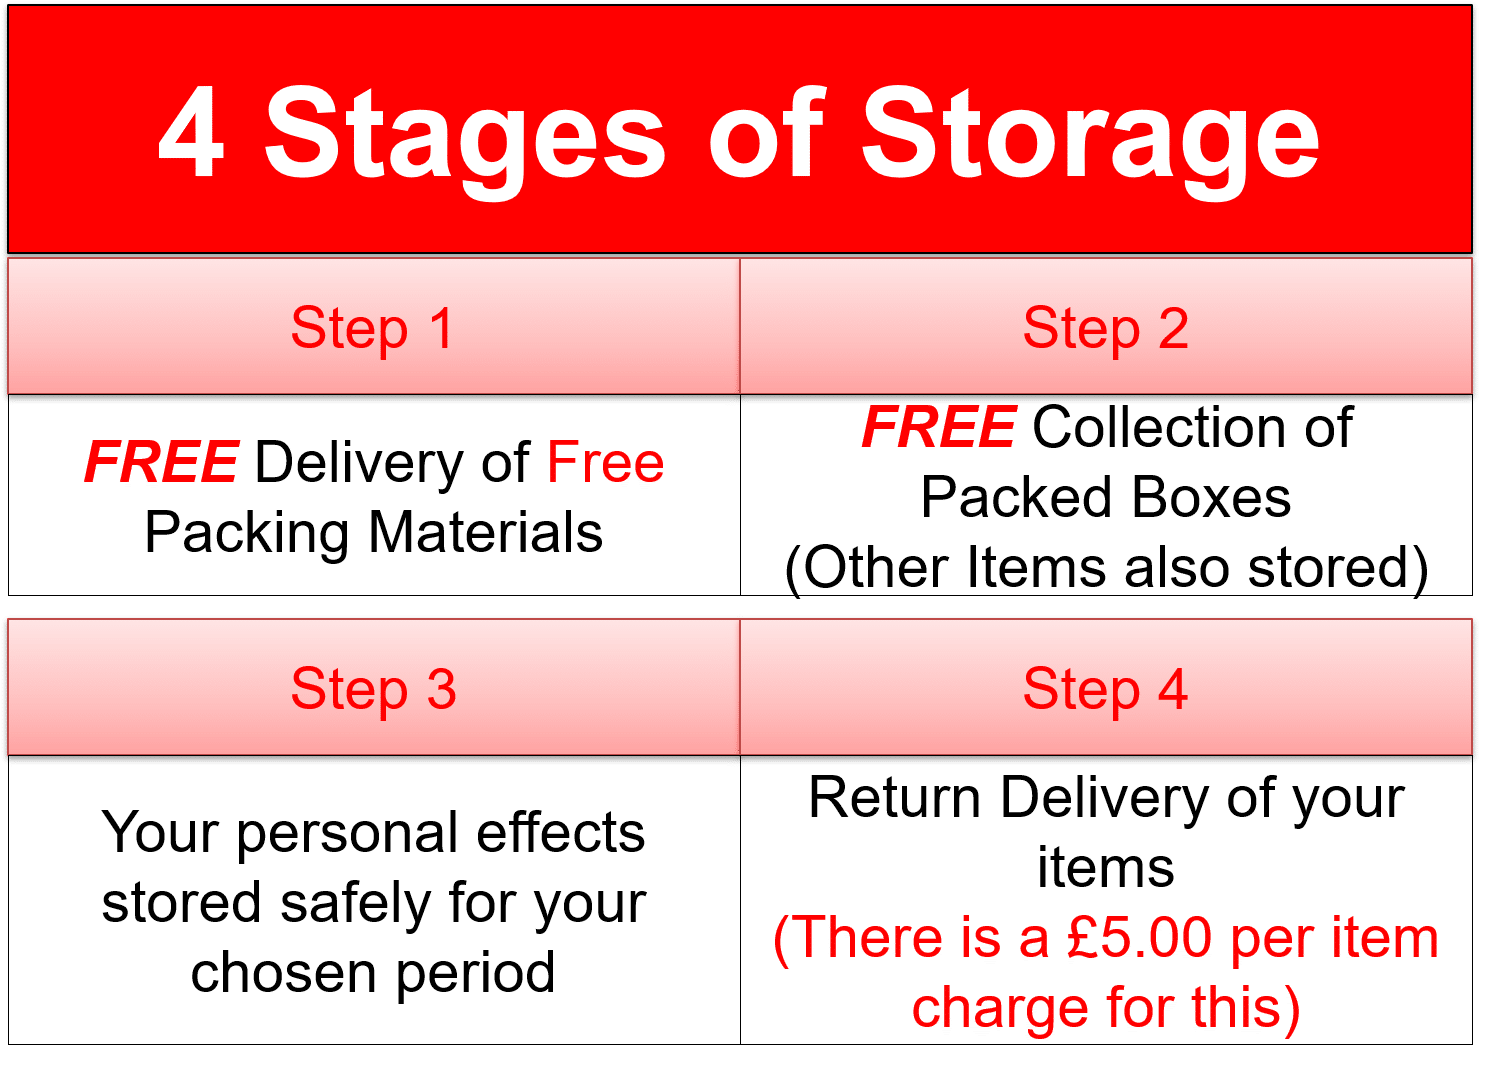 Storage Service